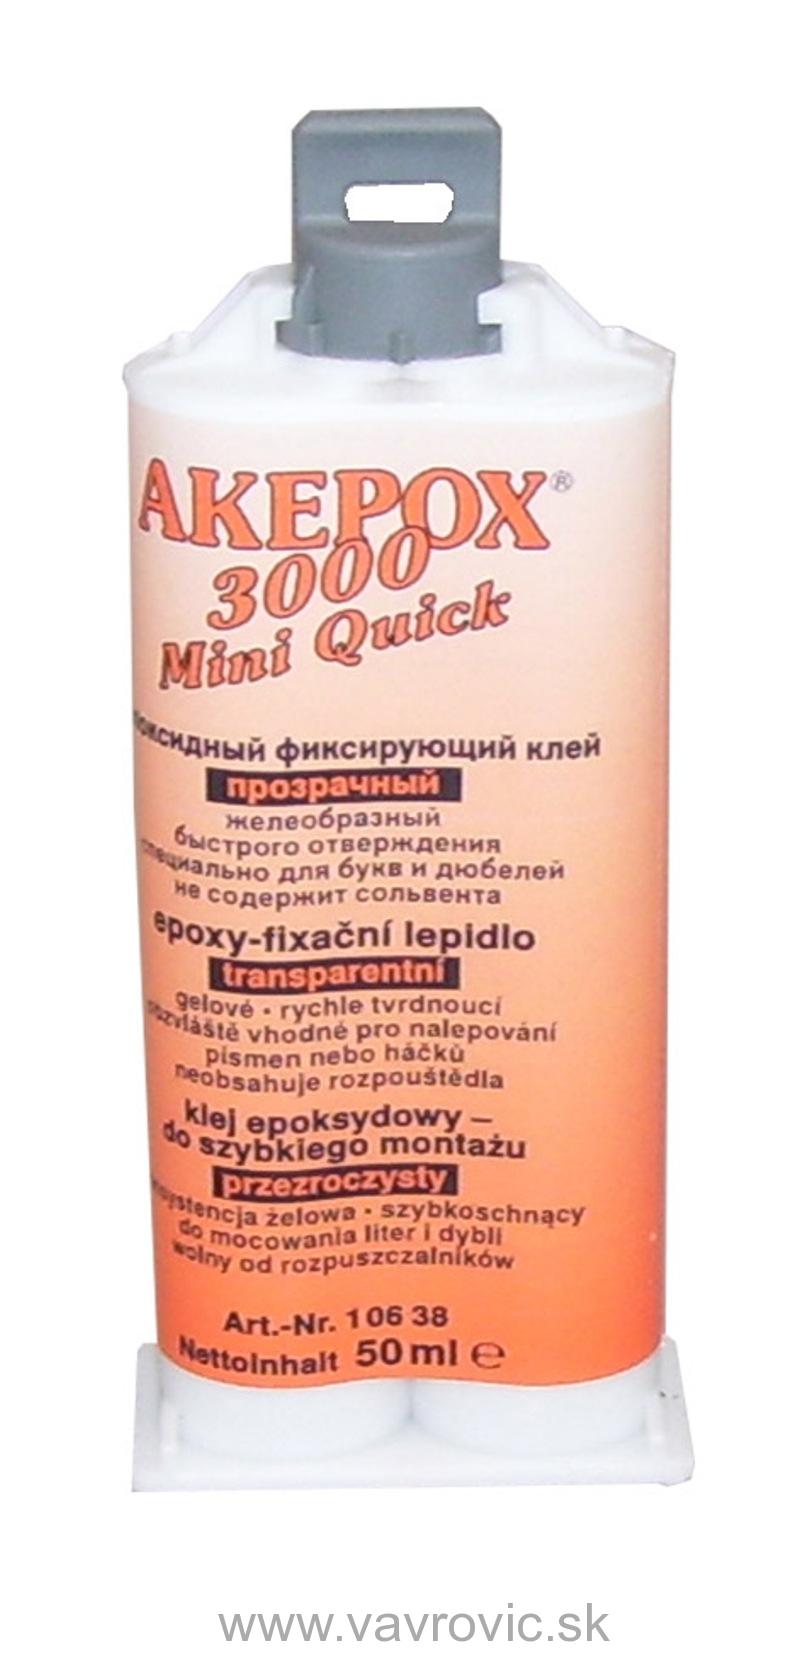 AKEMI Akepox 3000 - transpatentné / 50 ml